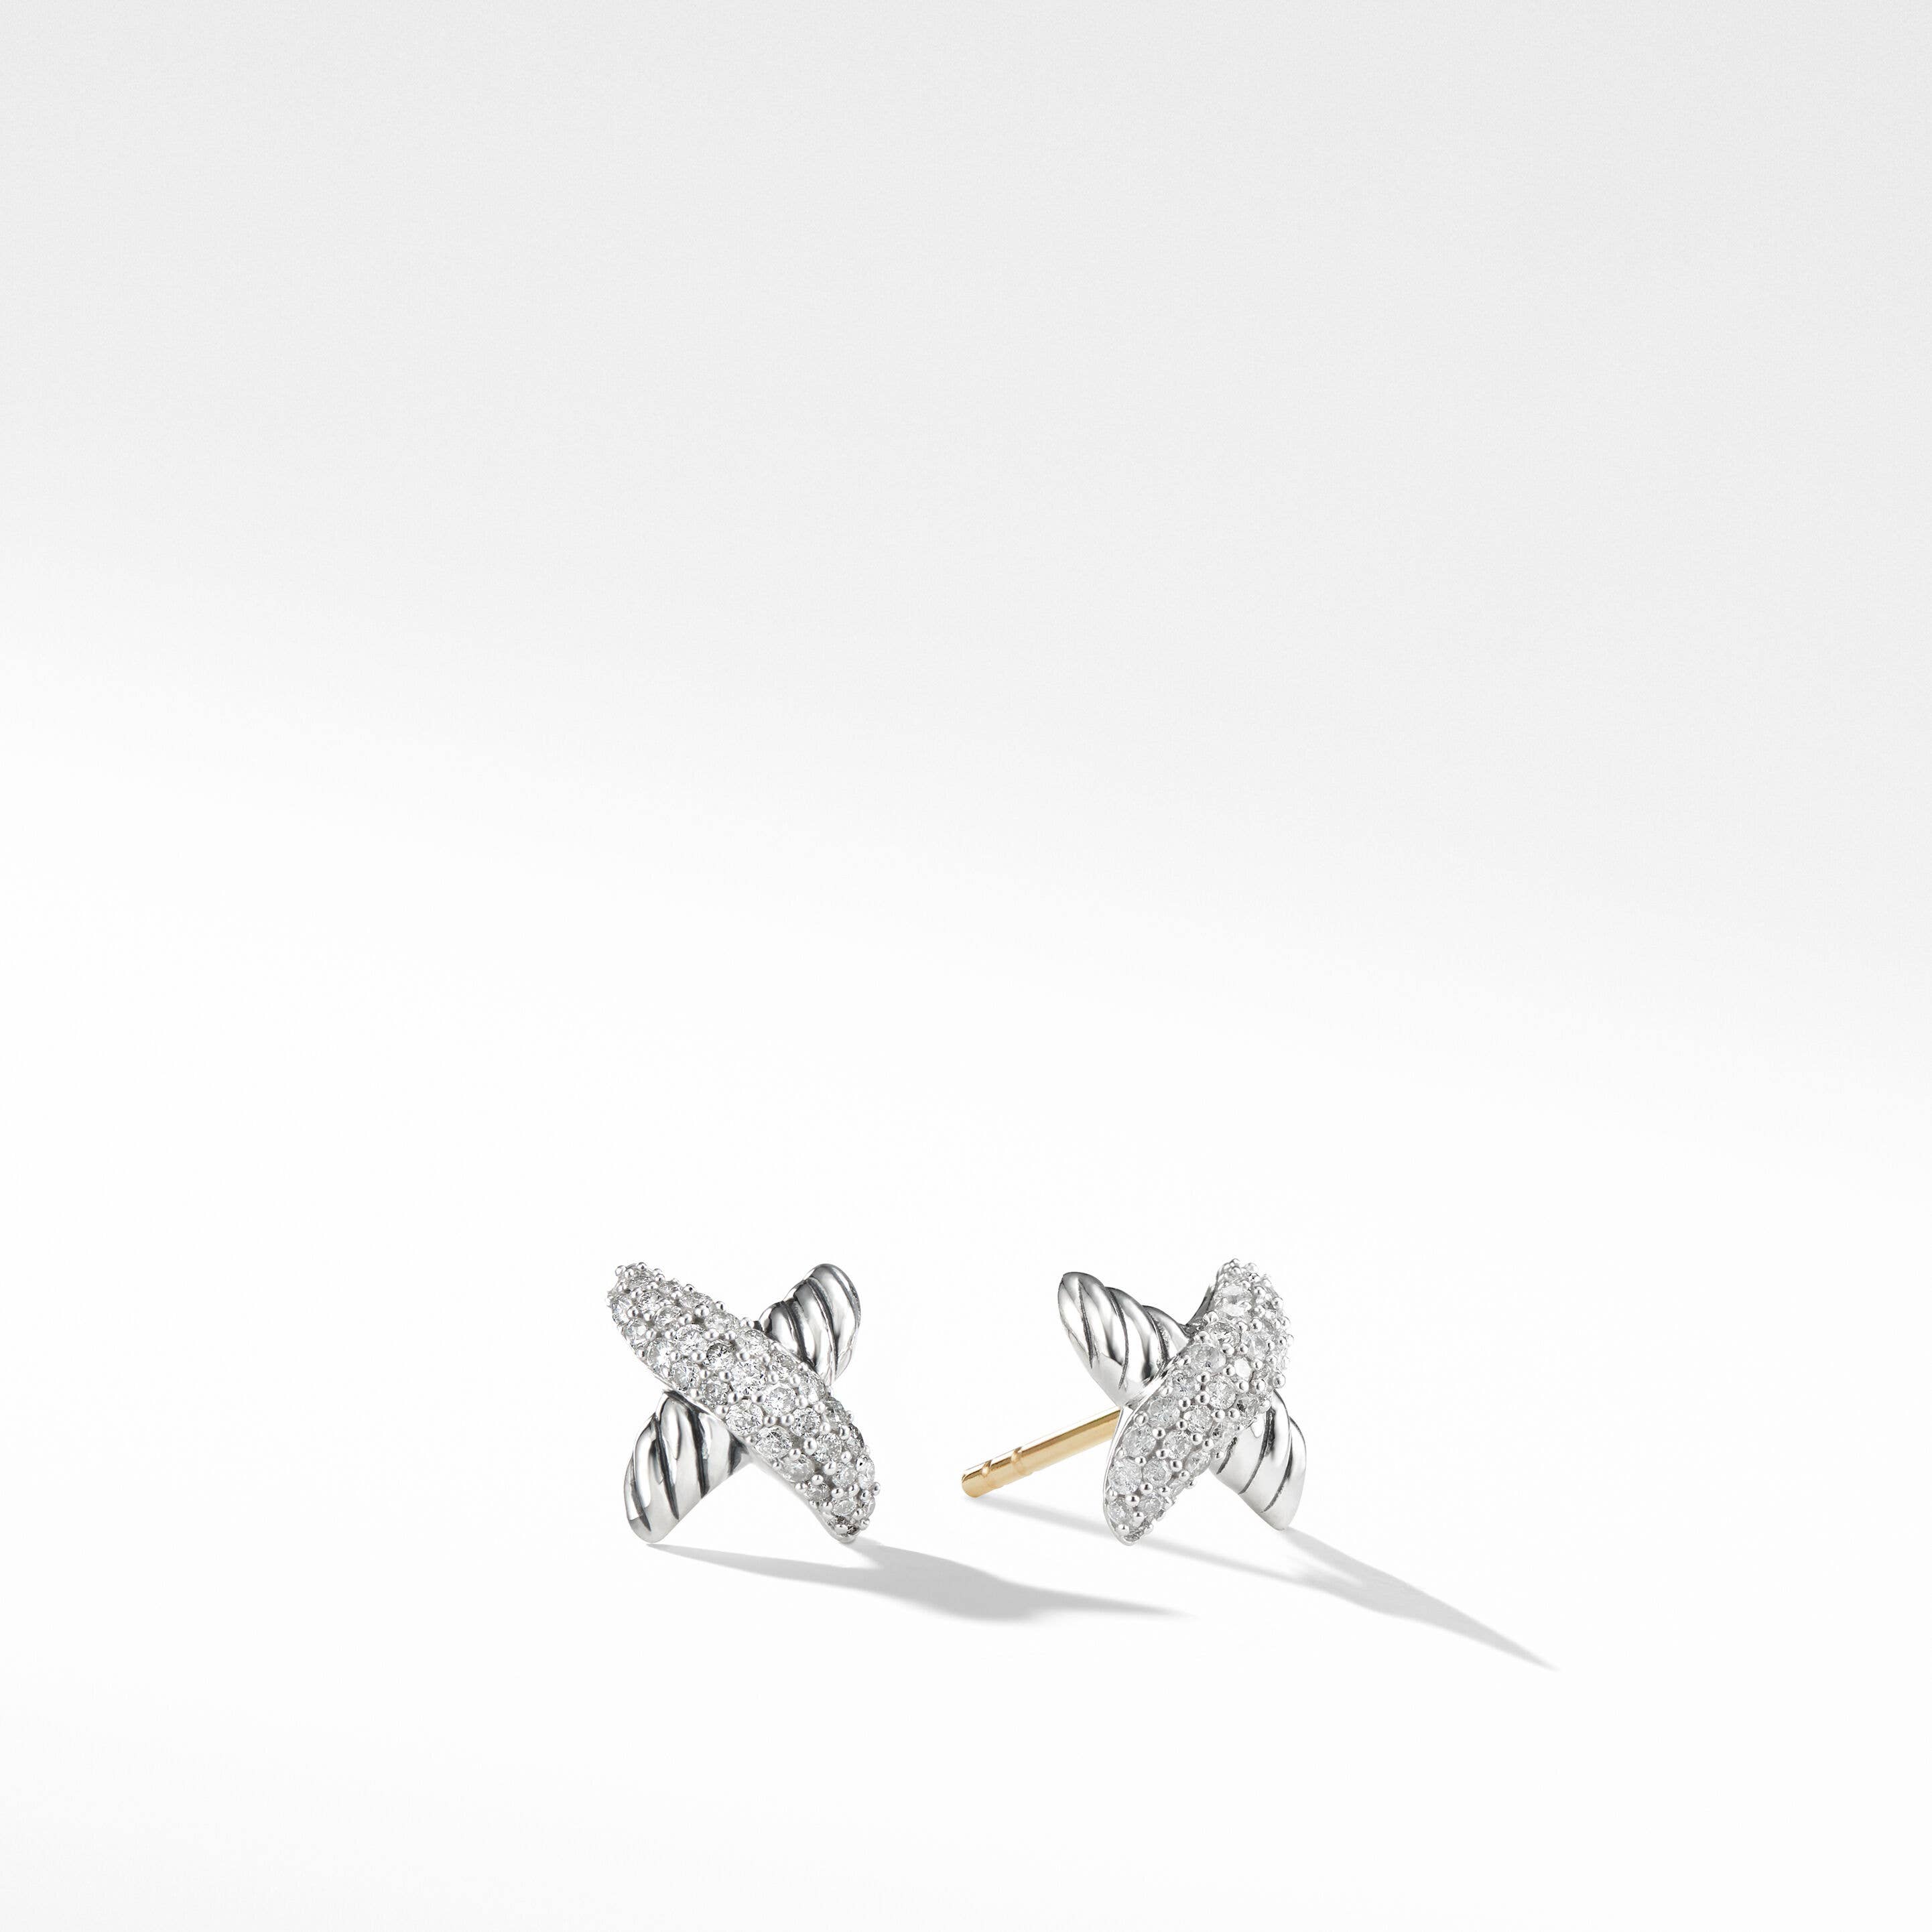 Petite X Stud Earrings in Sterling Silver with Pavé Diamonds